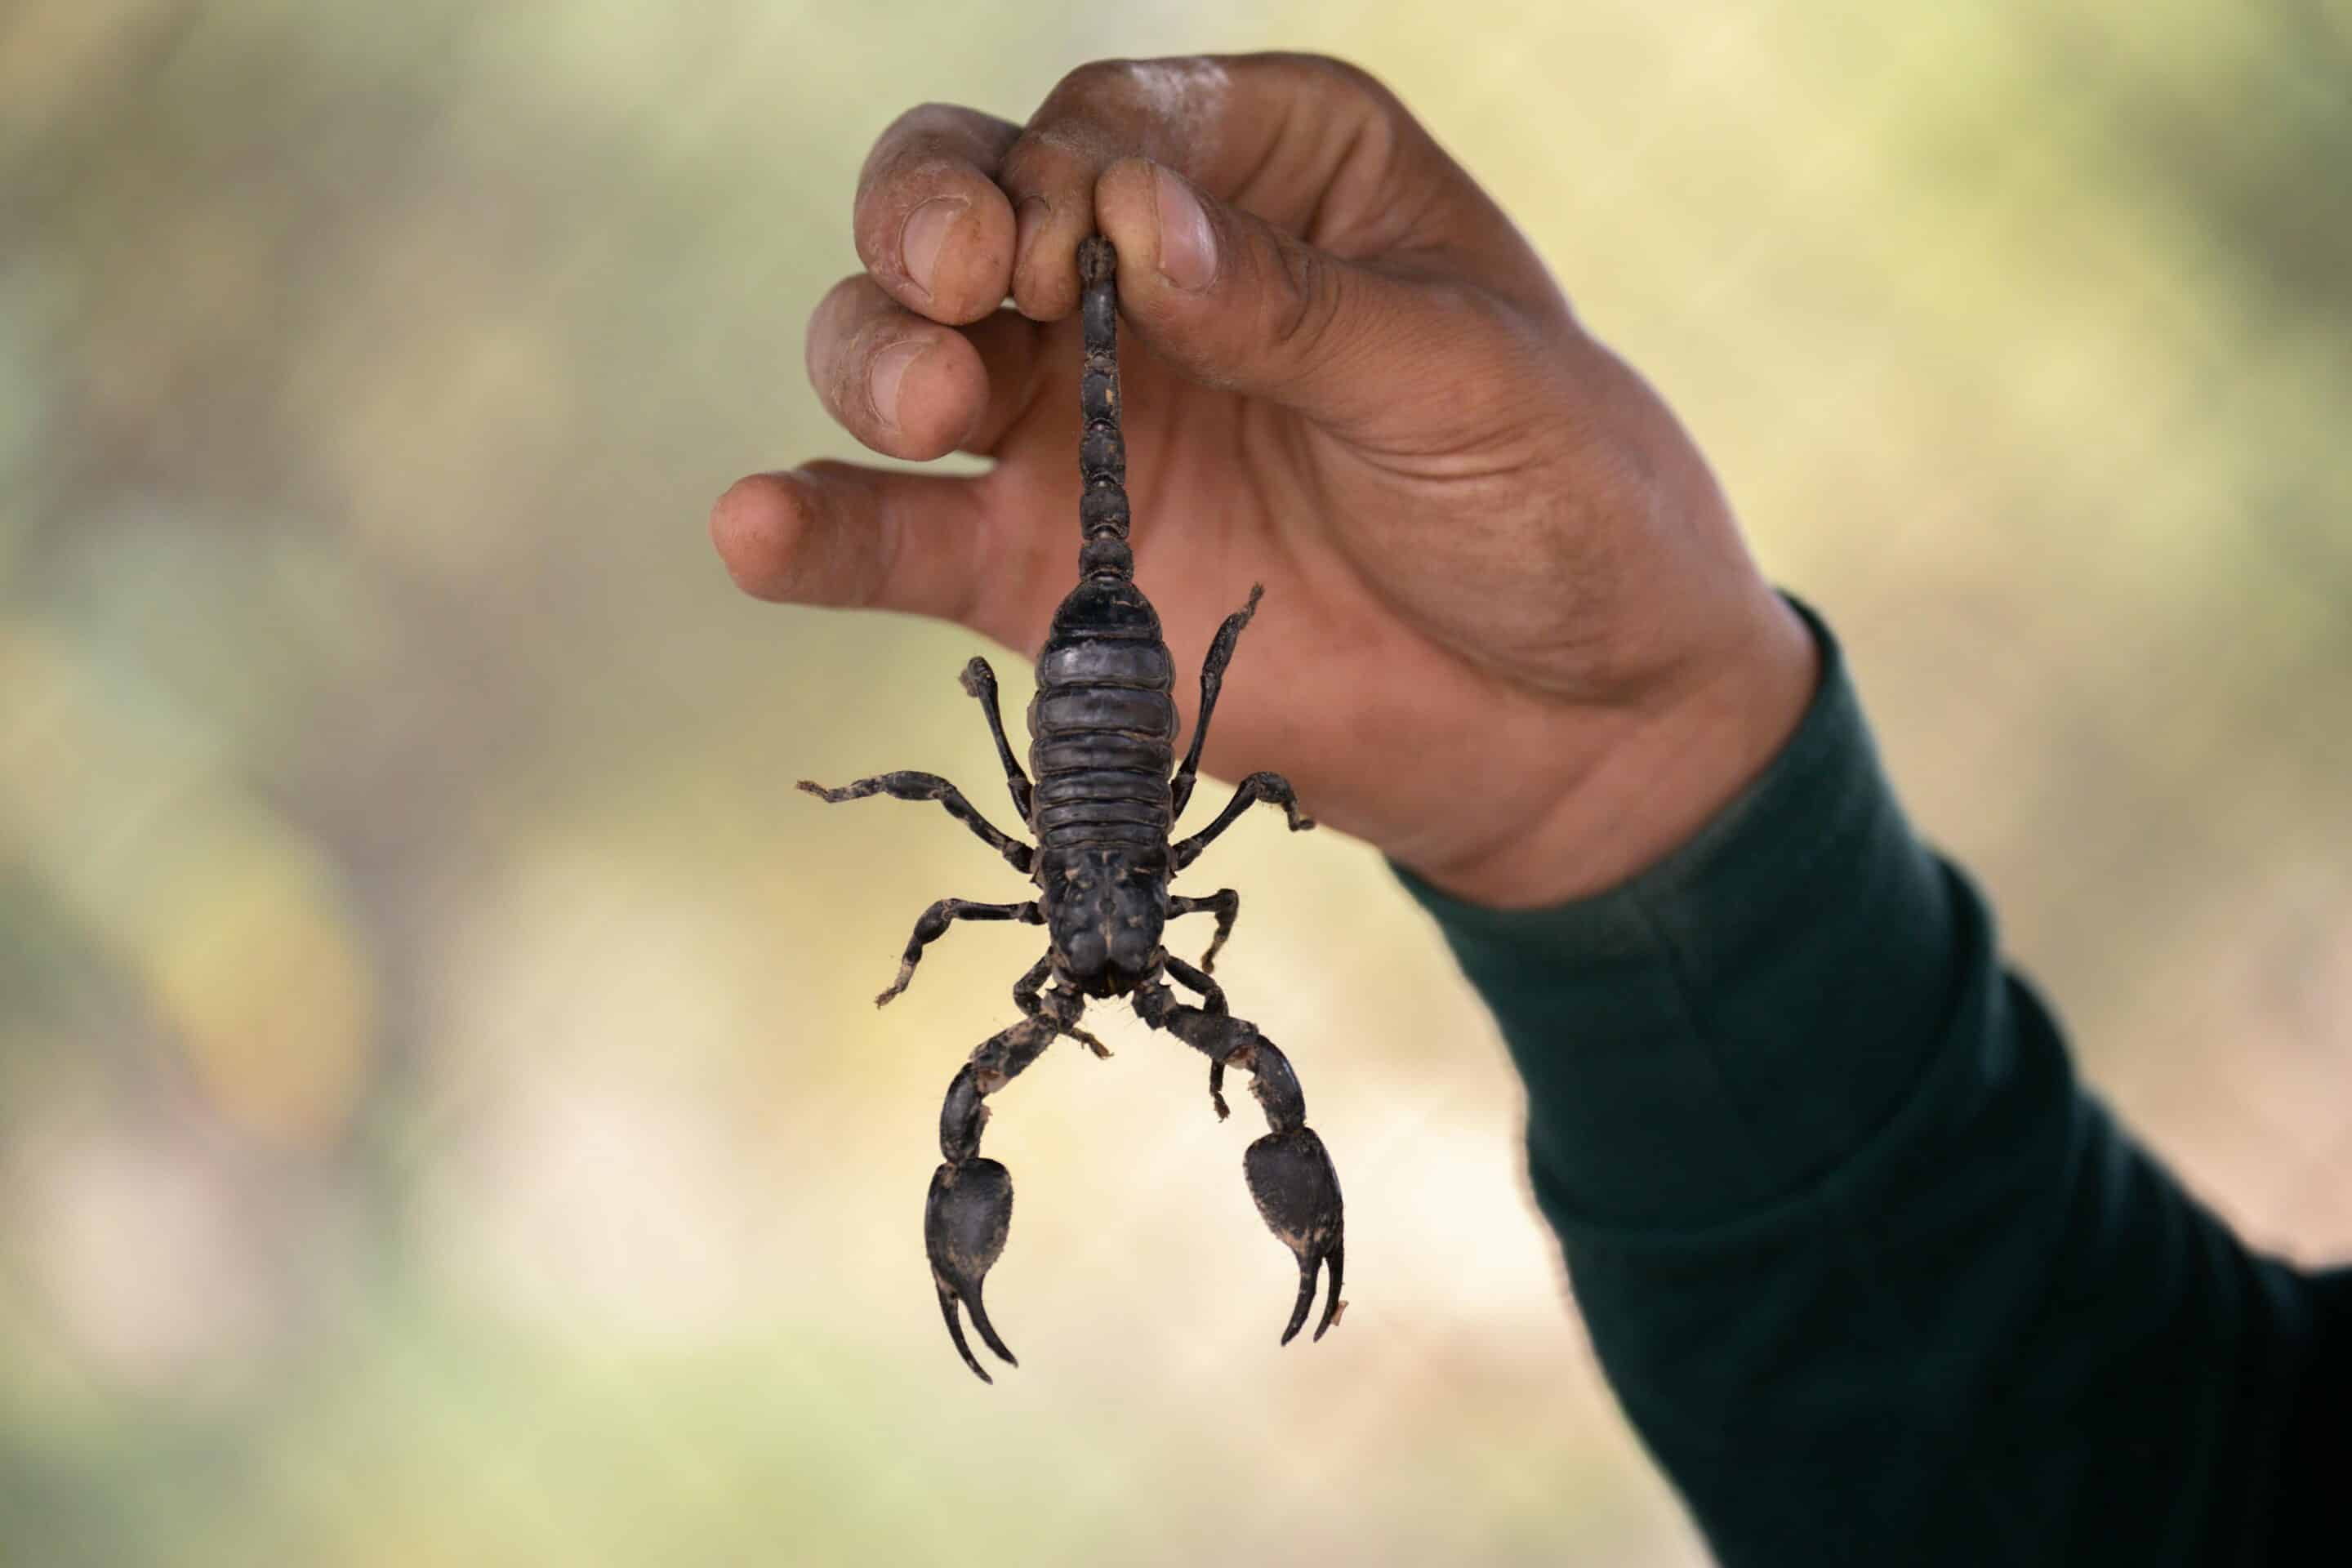 Las Vegas Scorpion Pest Control - Tested and Verified Methods